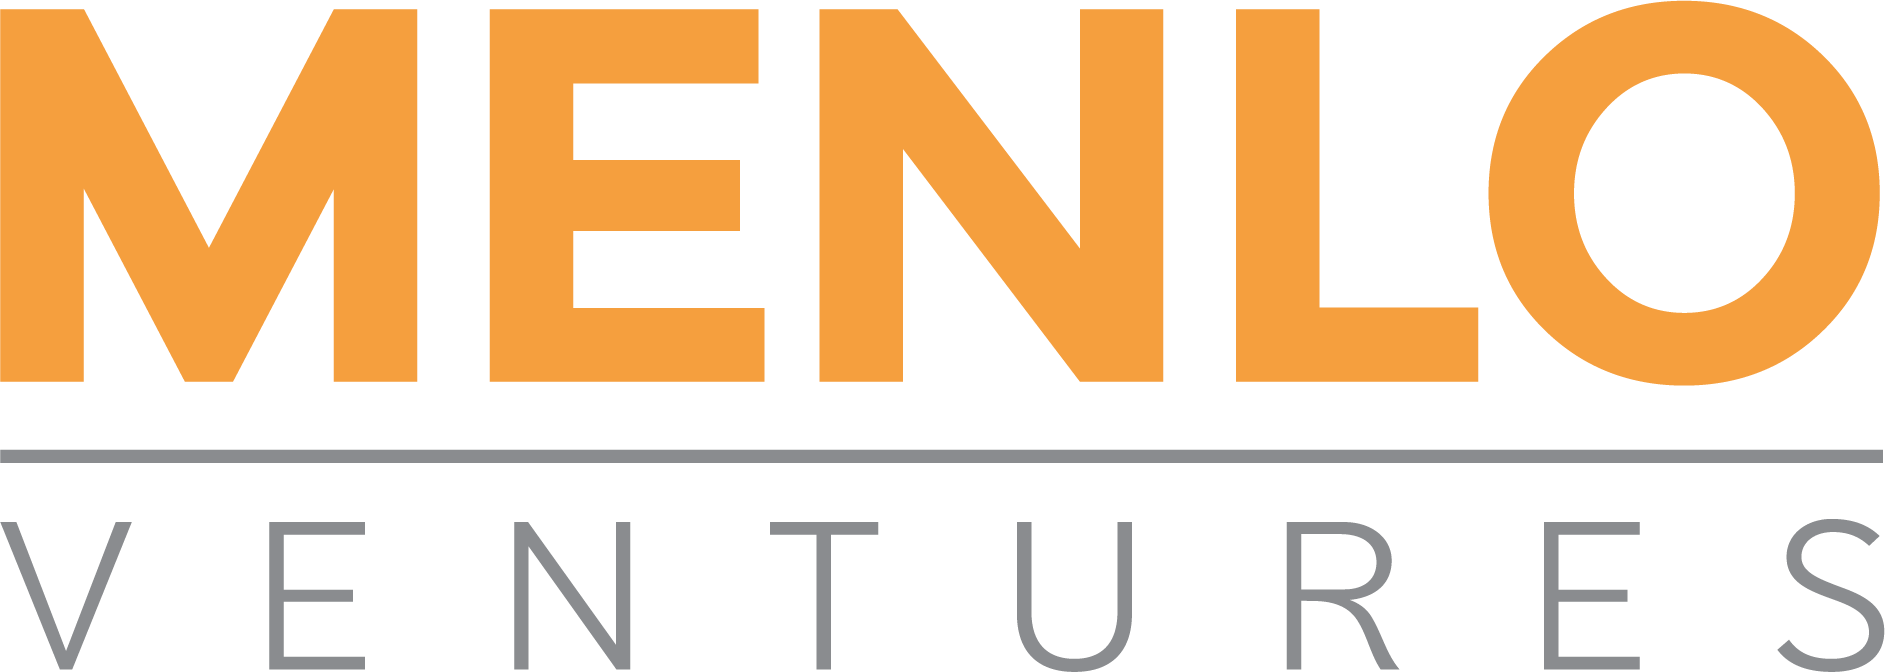 Menlo_Ventures_Logo_orange+gray_MAIN (2).png